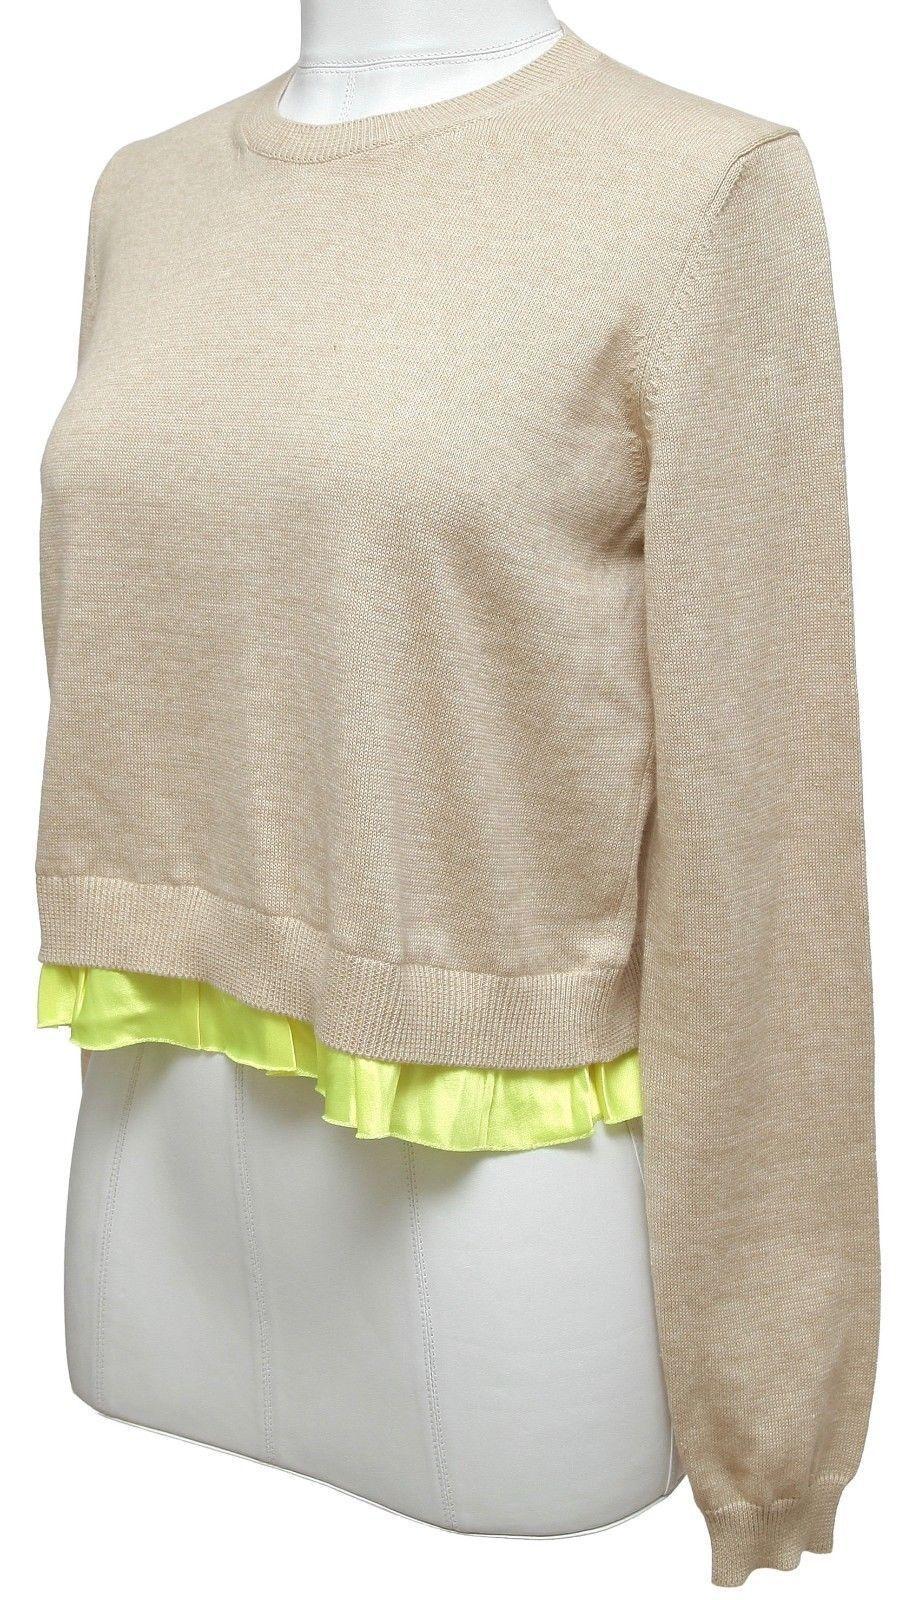 Beige MIU MIU Sweater Knit Top Cotton Viscose Tan Yellow Silk Long Sleeve 40 NWT